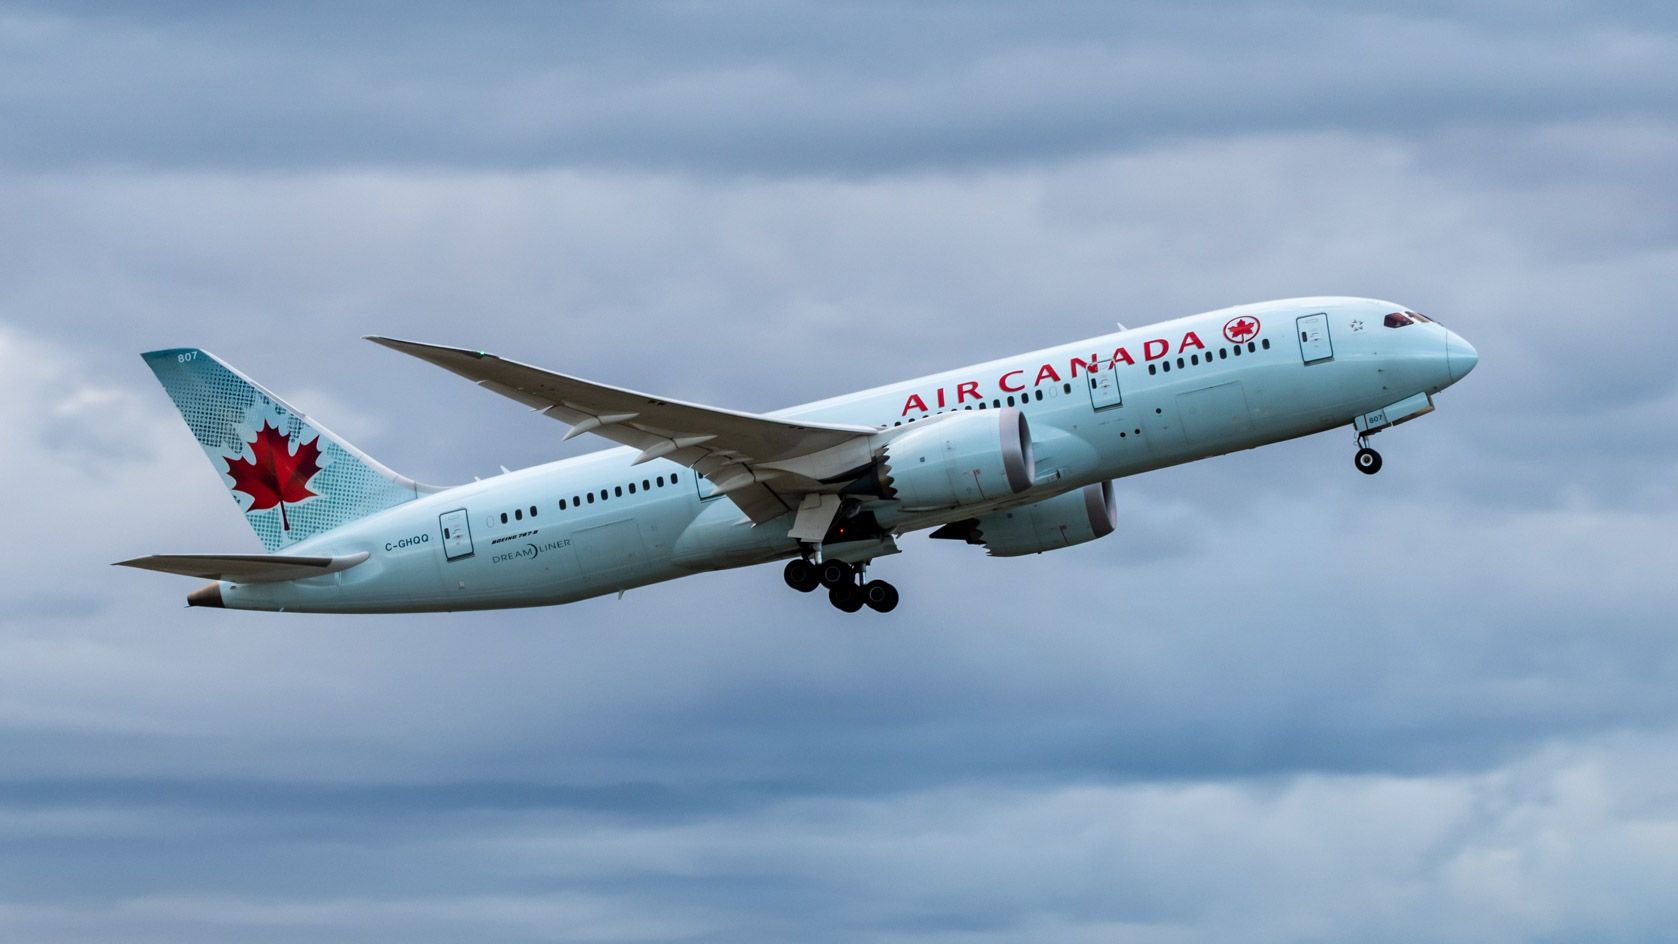 RISING AIR CANADA 787-8 AGAINST OVERCAST